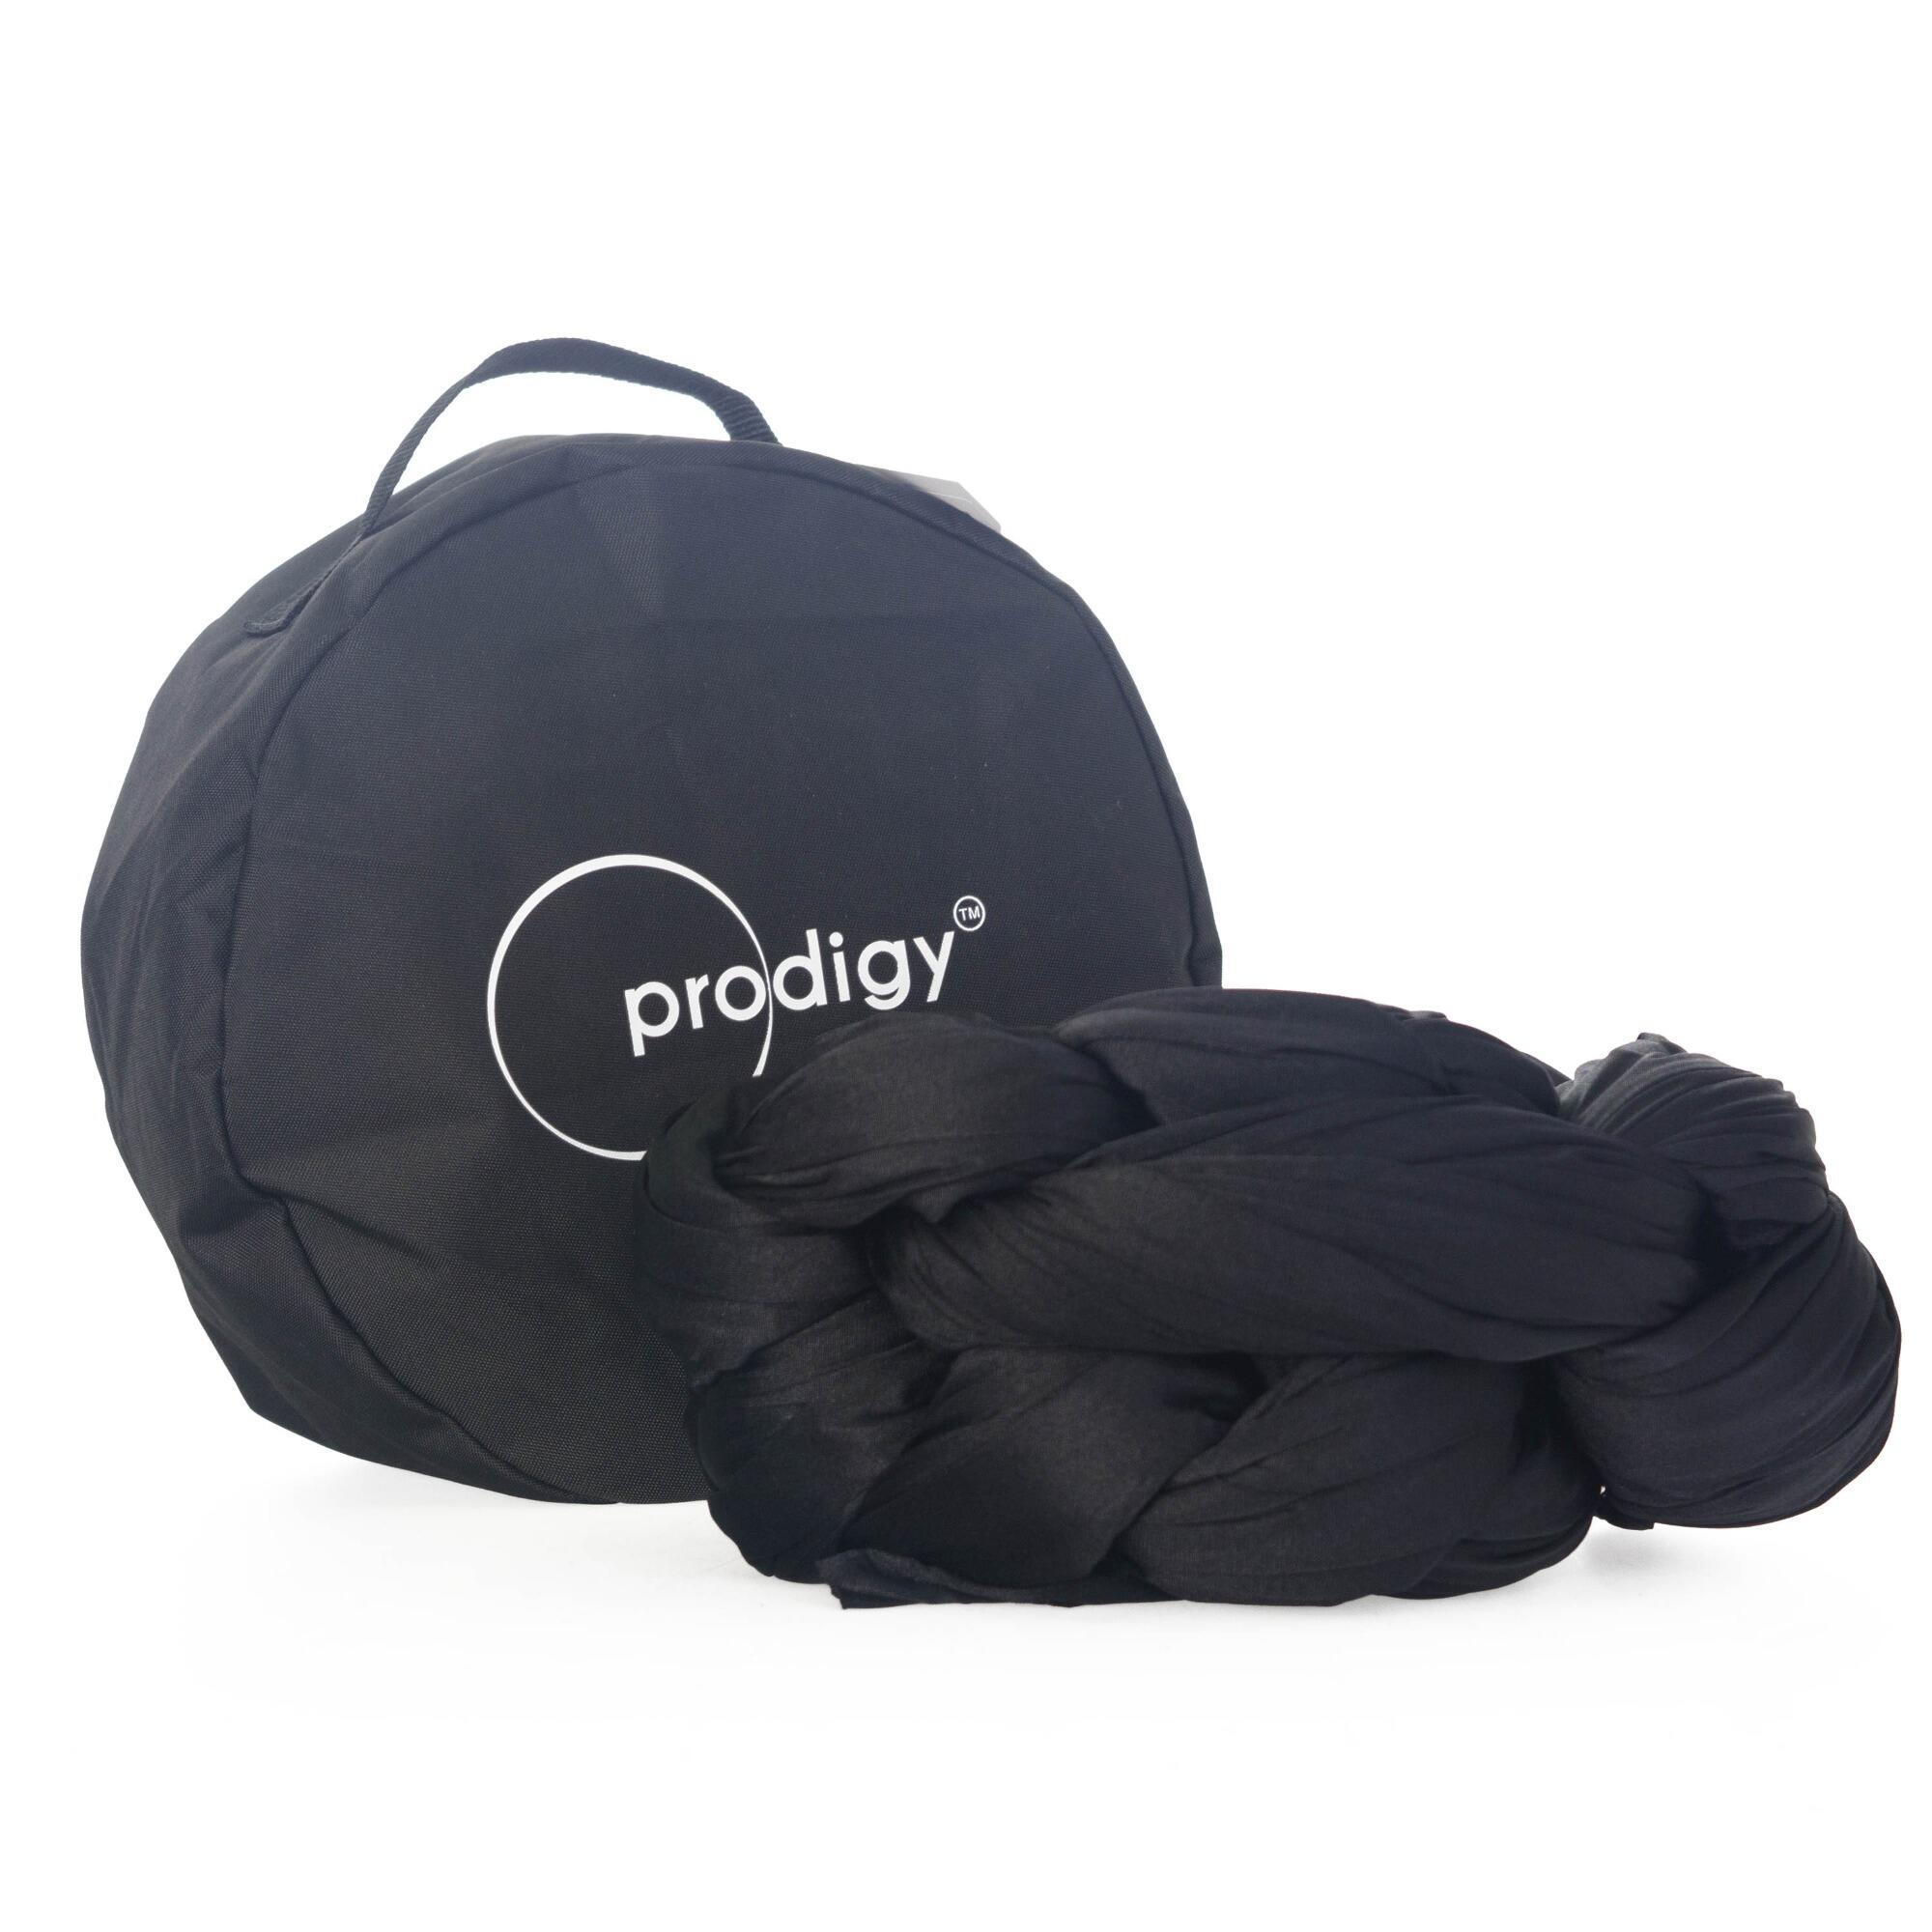 PRODIGY 6m Prodigy Aerial Fabric for Hammocks -Black with round Prodigy bag